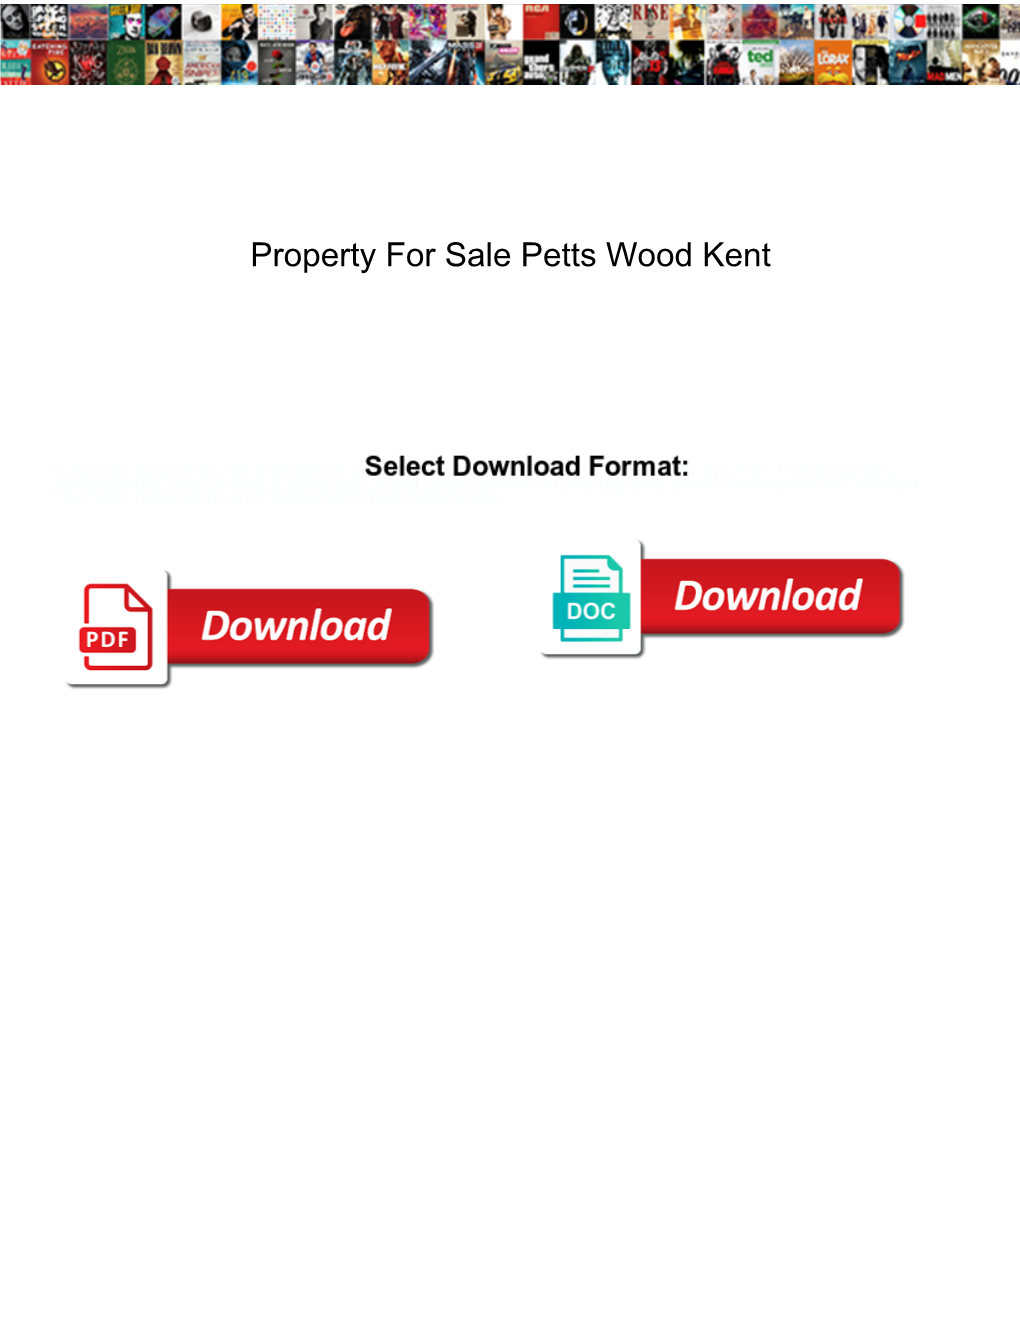 Property for Sale Petts Wood Kent